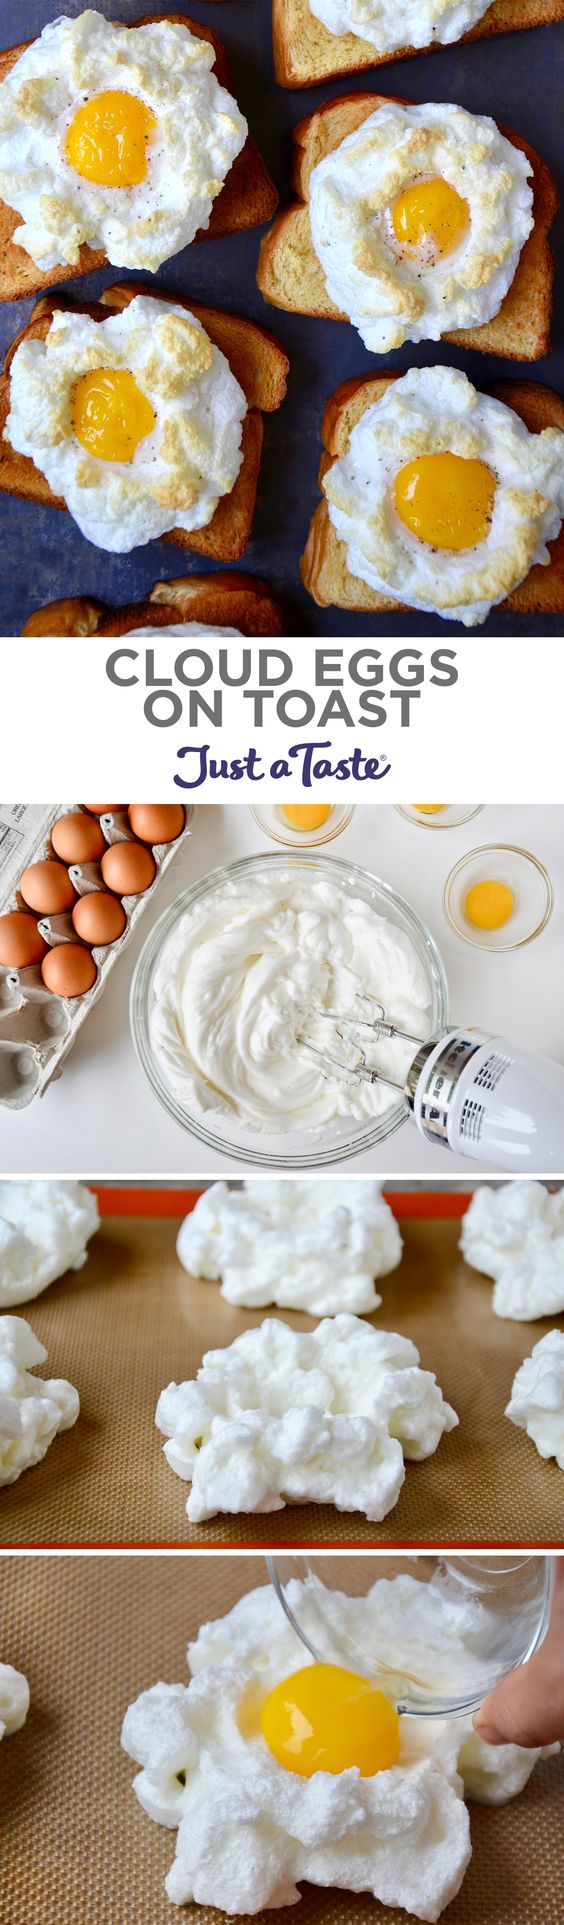 Cloud Eggs on Toast recipe from justataste.com #cloudeggs #recipe